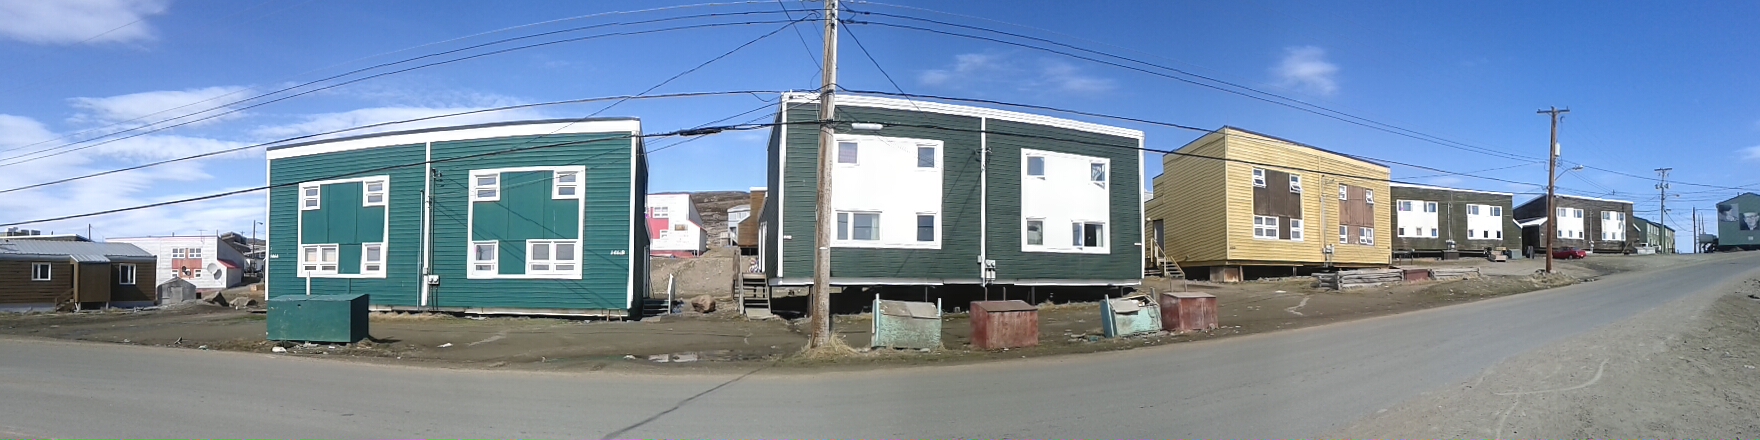 The dorm-like housing of Iqaluit.